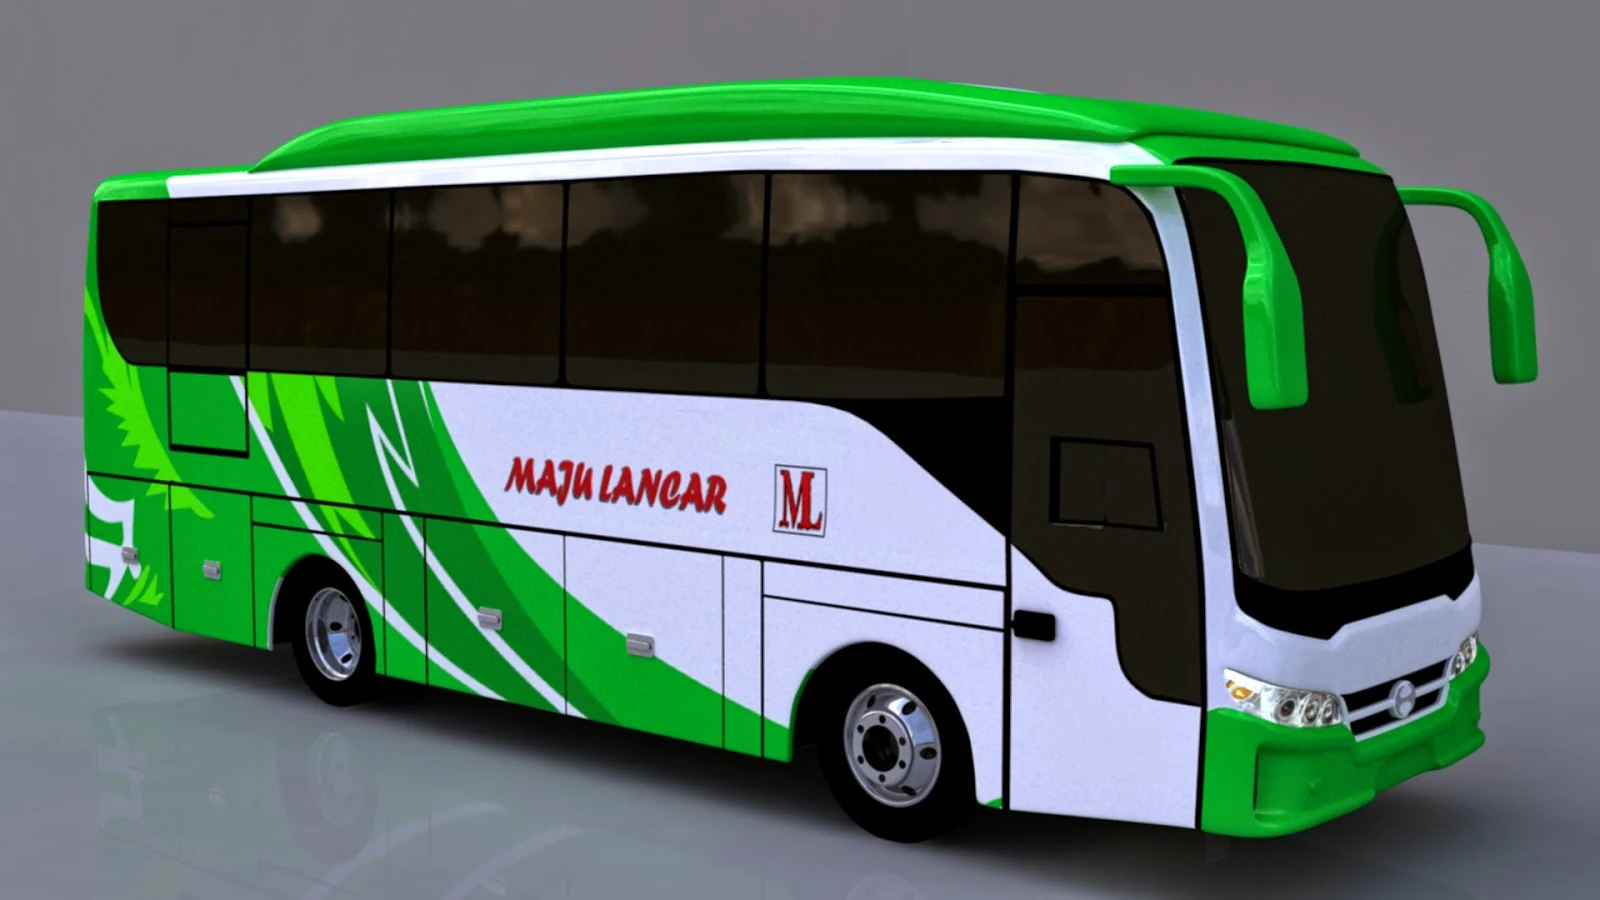 Design bus BEAT MD PO Maju Lancar